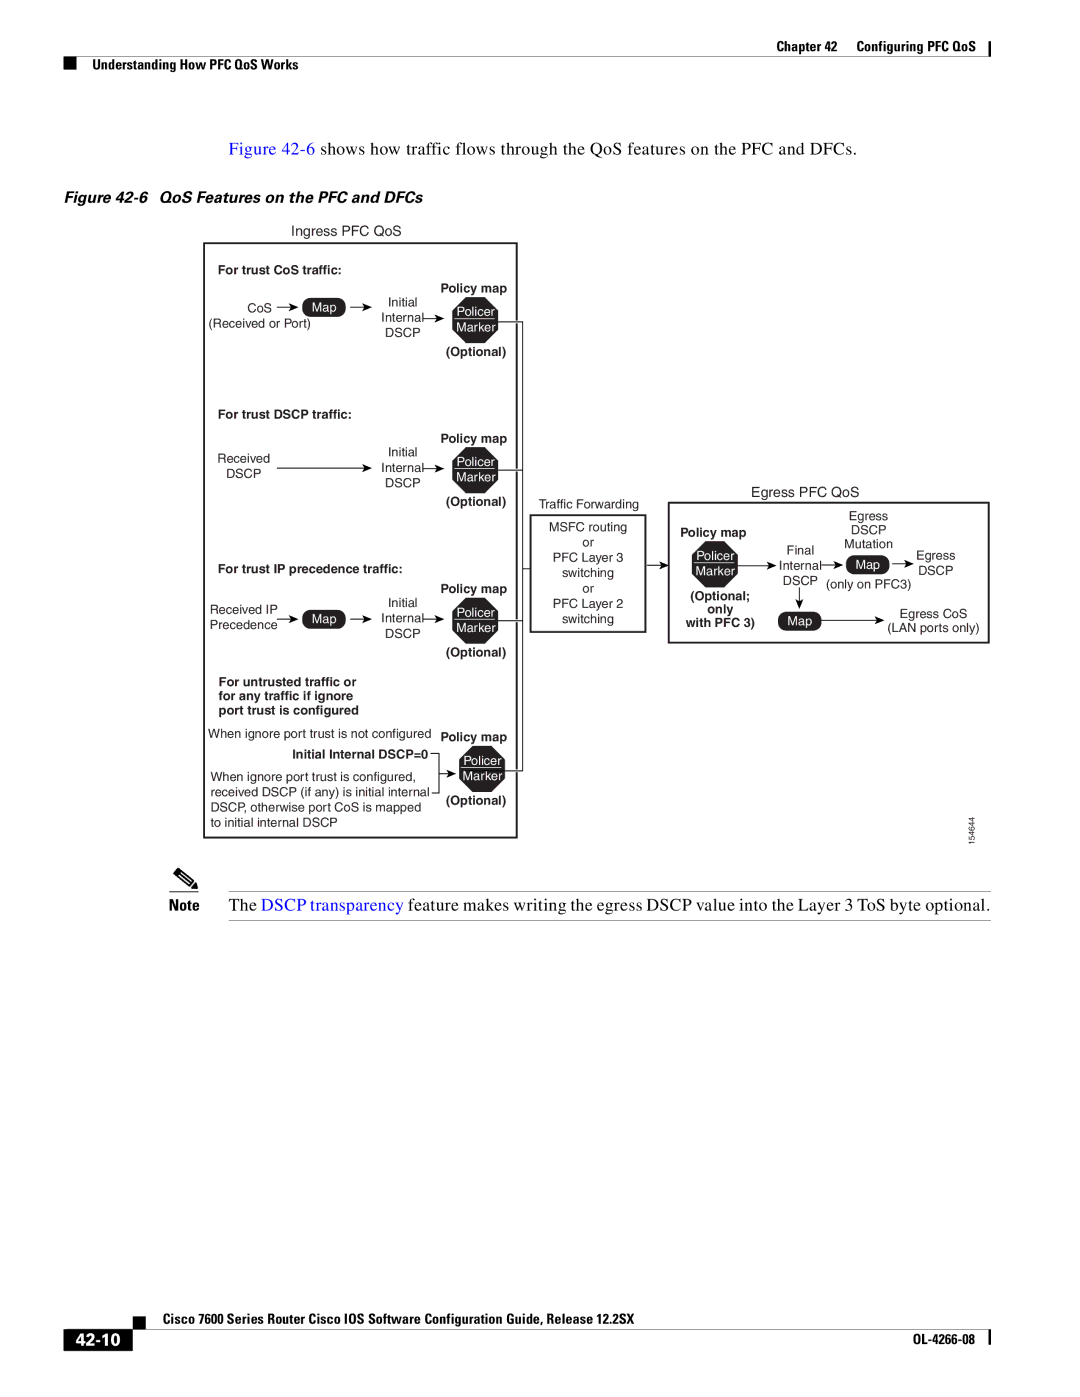 Cisco Systems OL-4266-08 manual 42-10, Ingress PFC QoS 